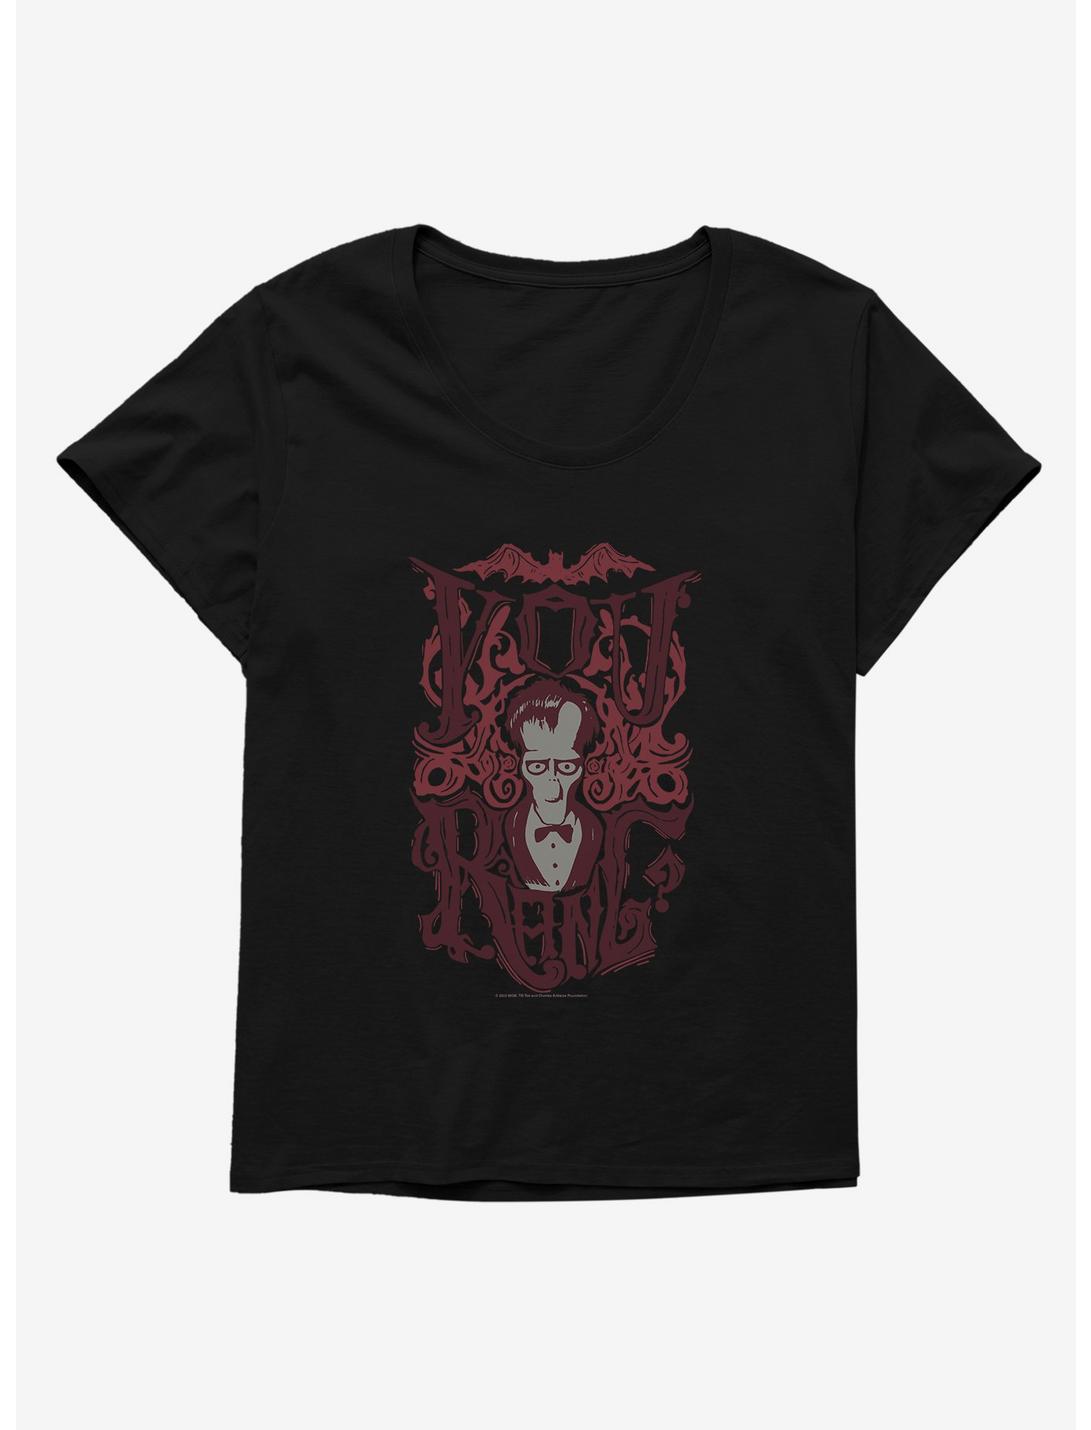 Addams Family You Rang? Womens T-Shirt Plus Size, BLACK, hi-res